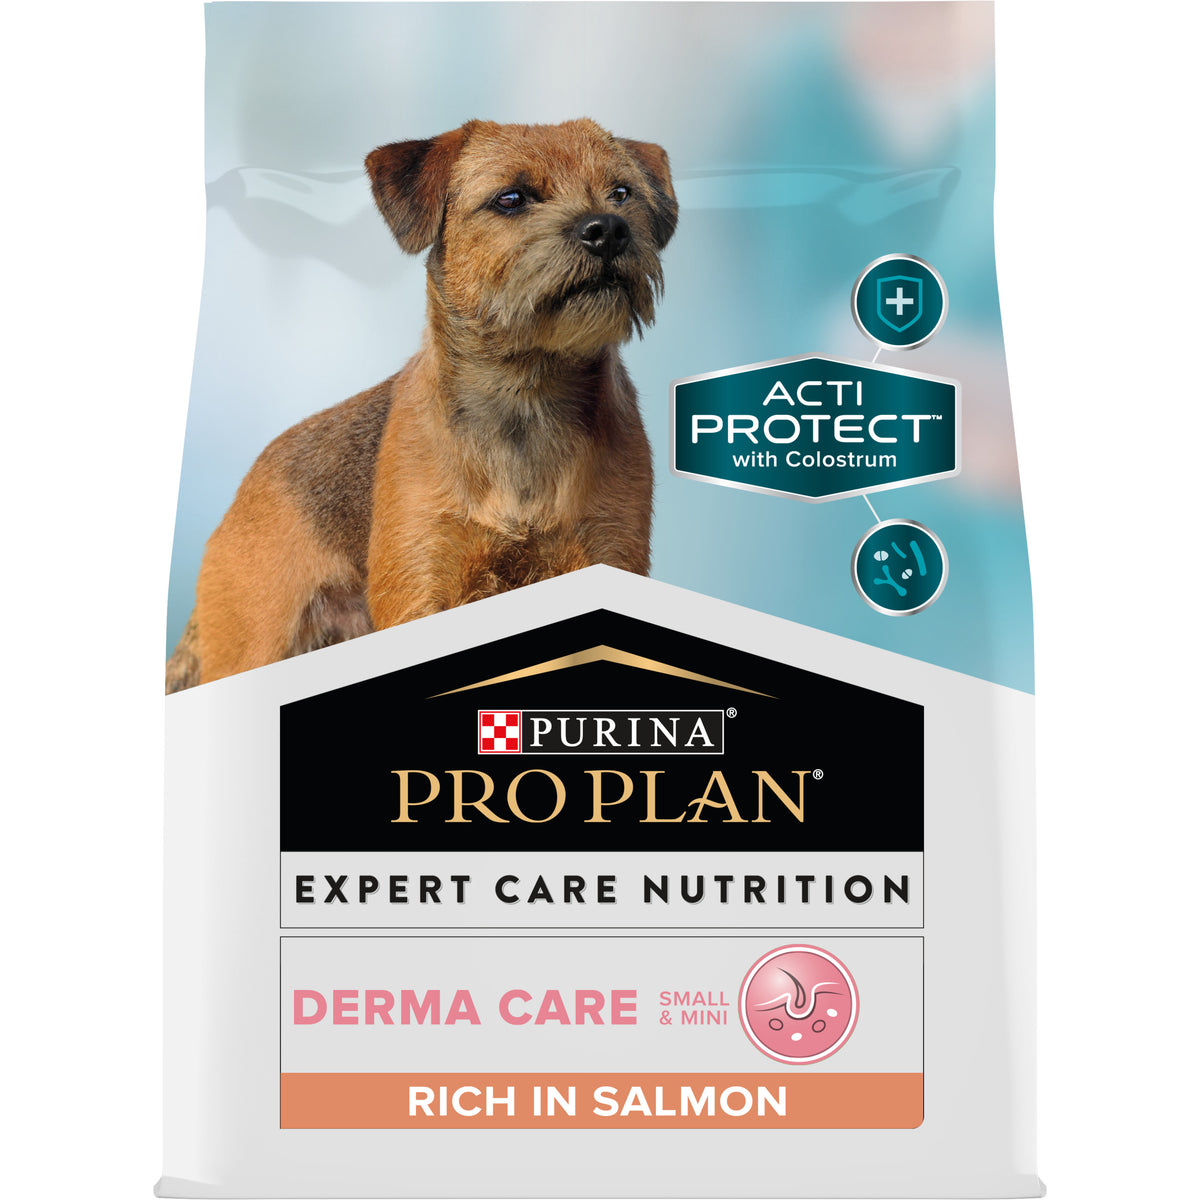 PURINA® PRO PLAN® Expert Care Nutrition - Canine Adult Small & Mini Derma Care - Salmon